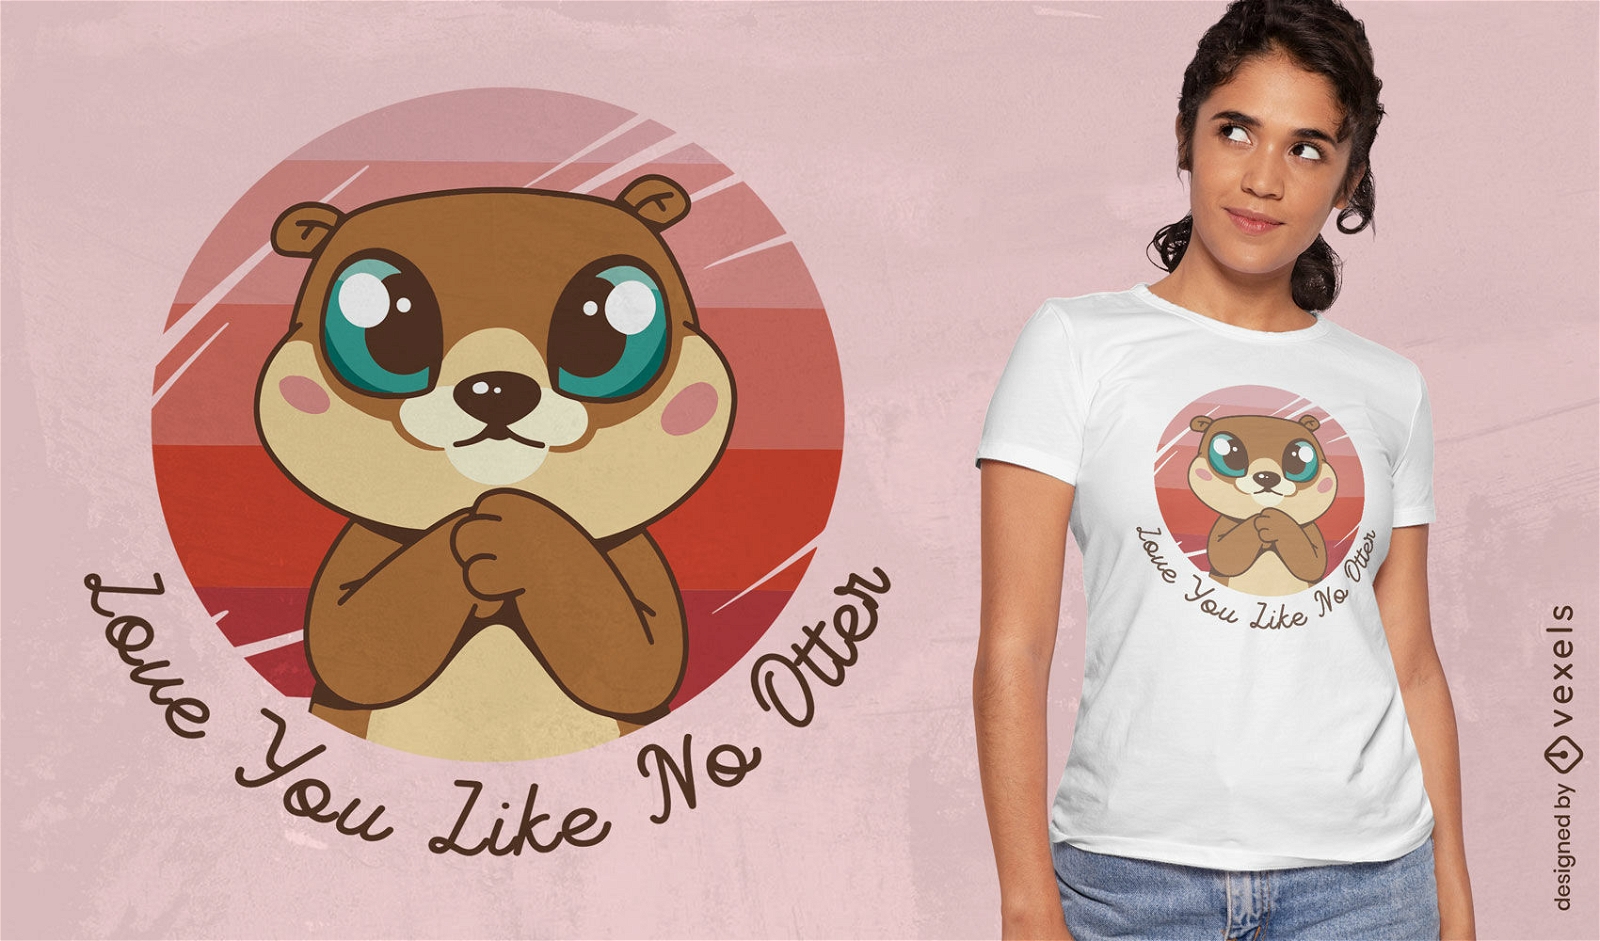 Adorable otter animal t-shirt design